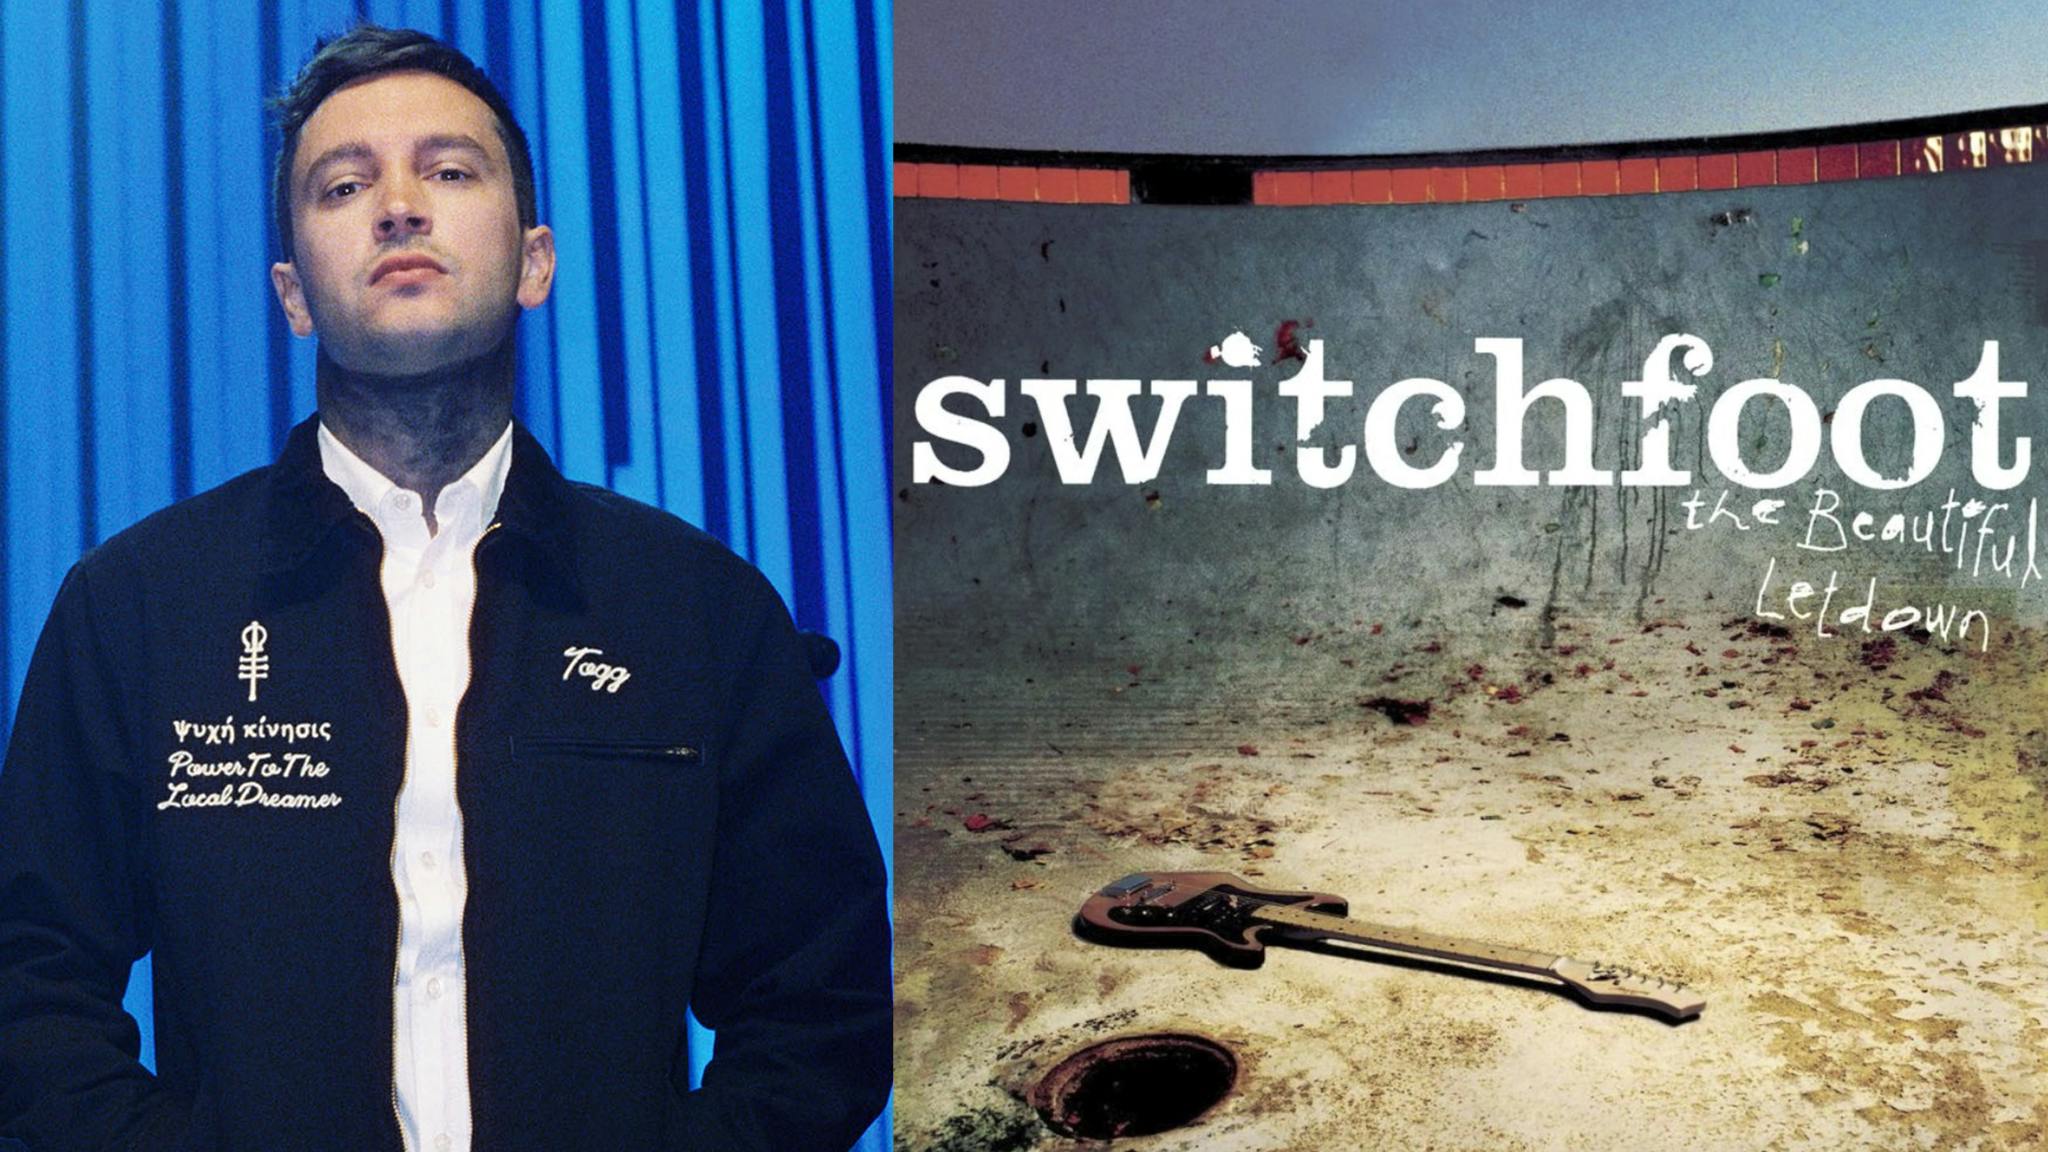 Hear twenty one pilots’ Tyler Joseph’s gorgeous new cover of Twenty-Four by Switchfoot